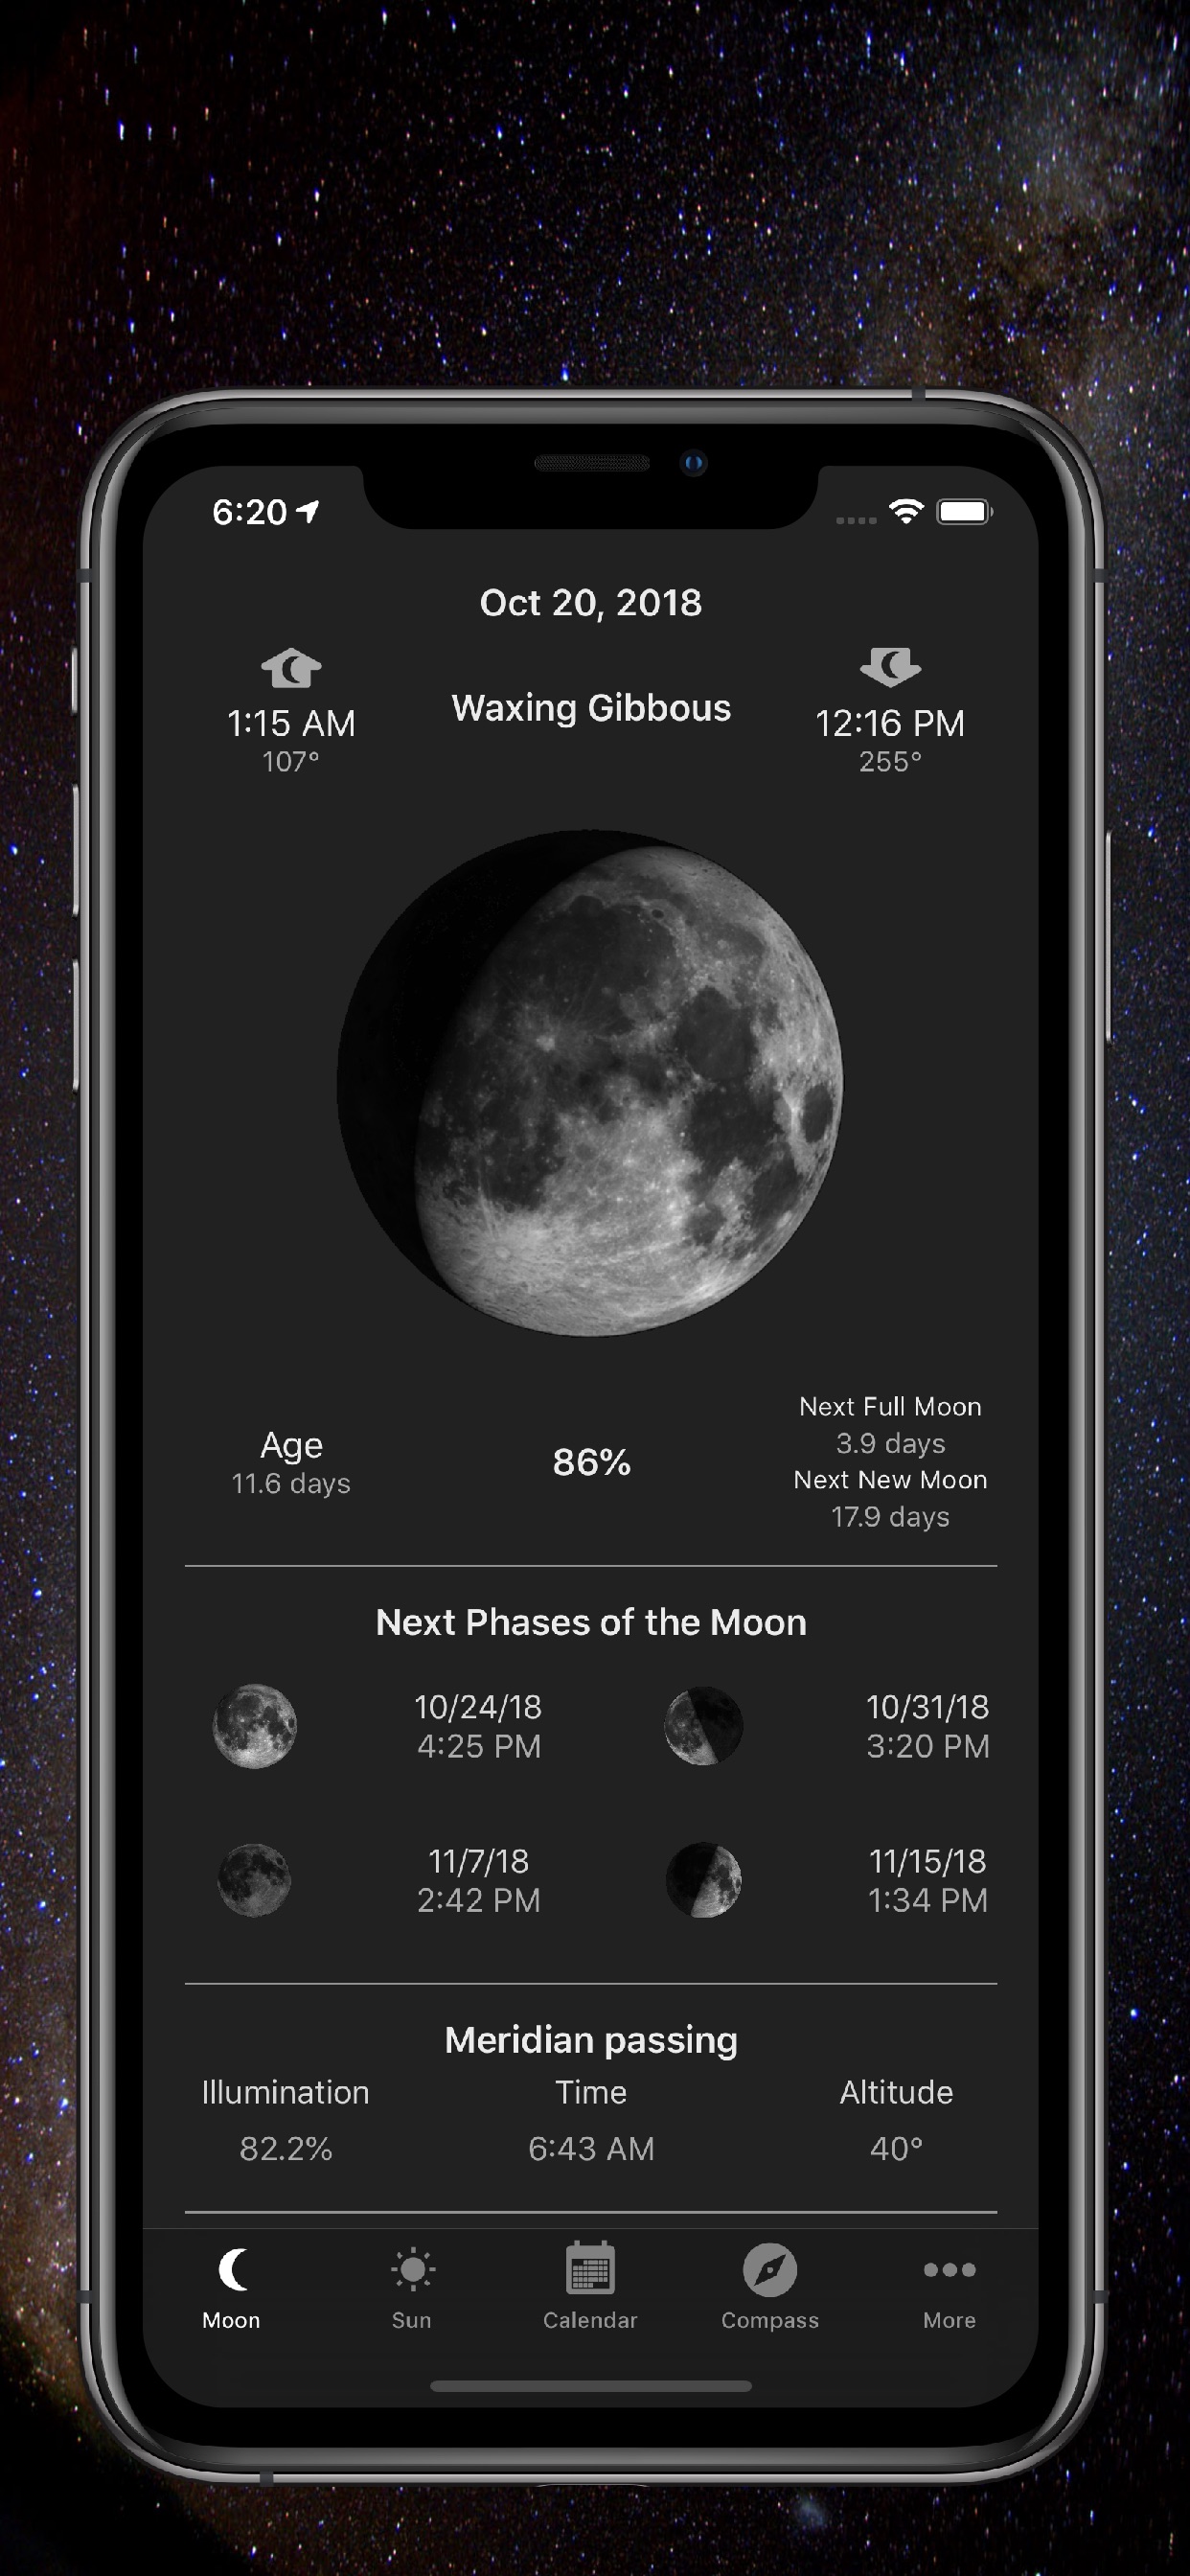 Moon Phase Calendar & Compass fos iOS